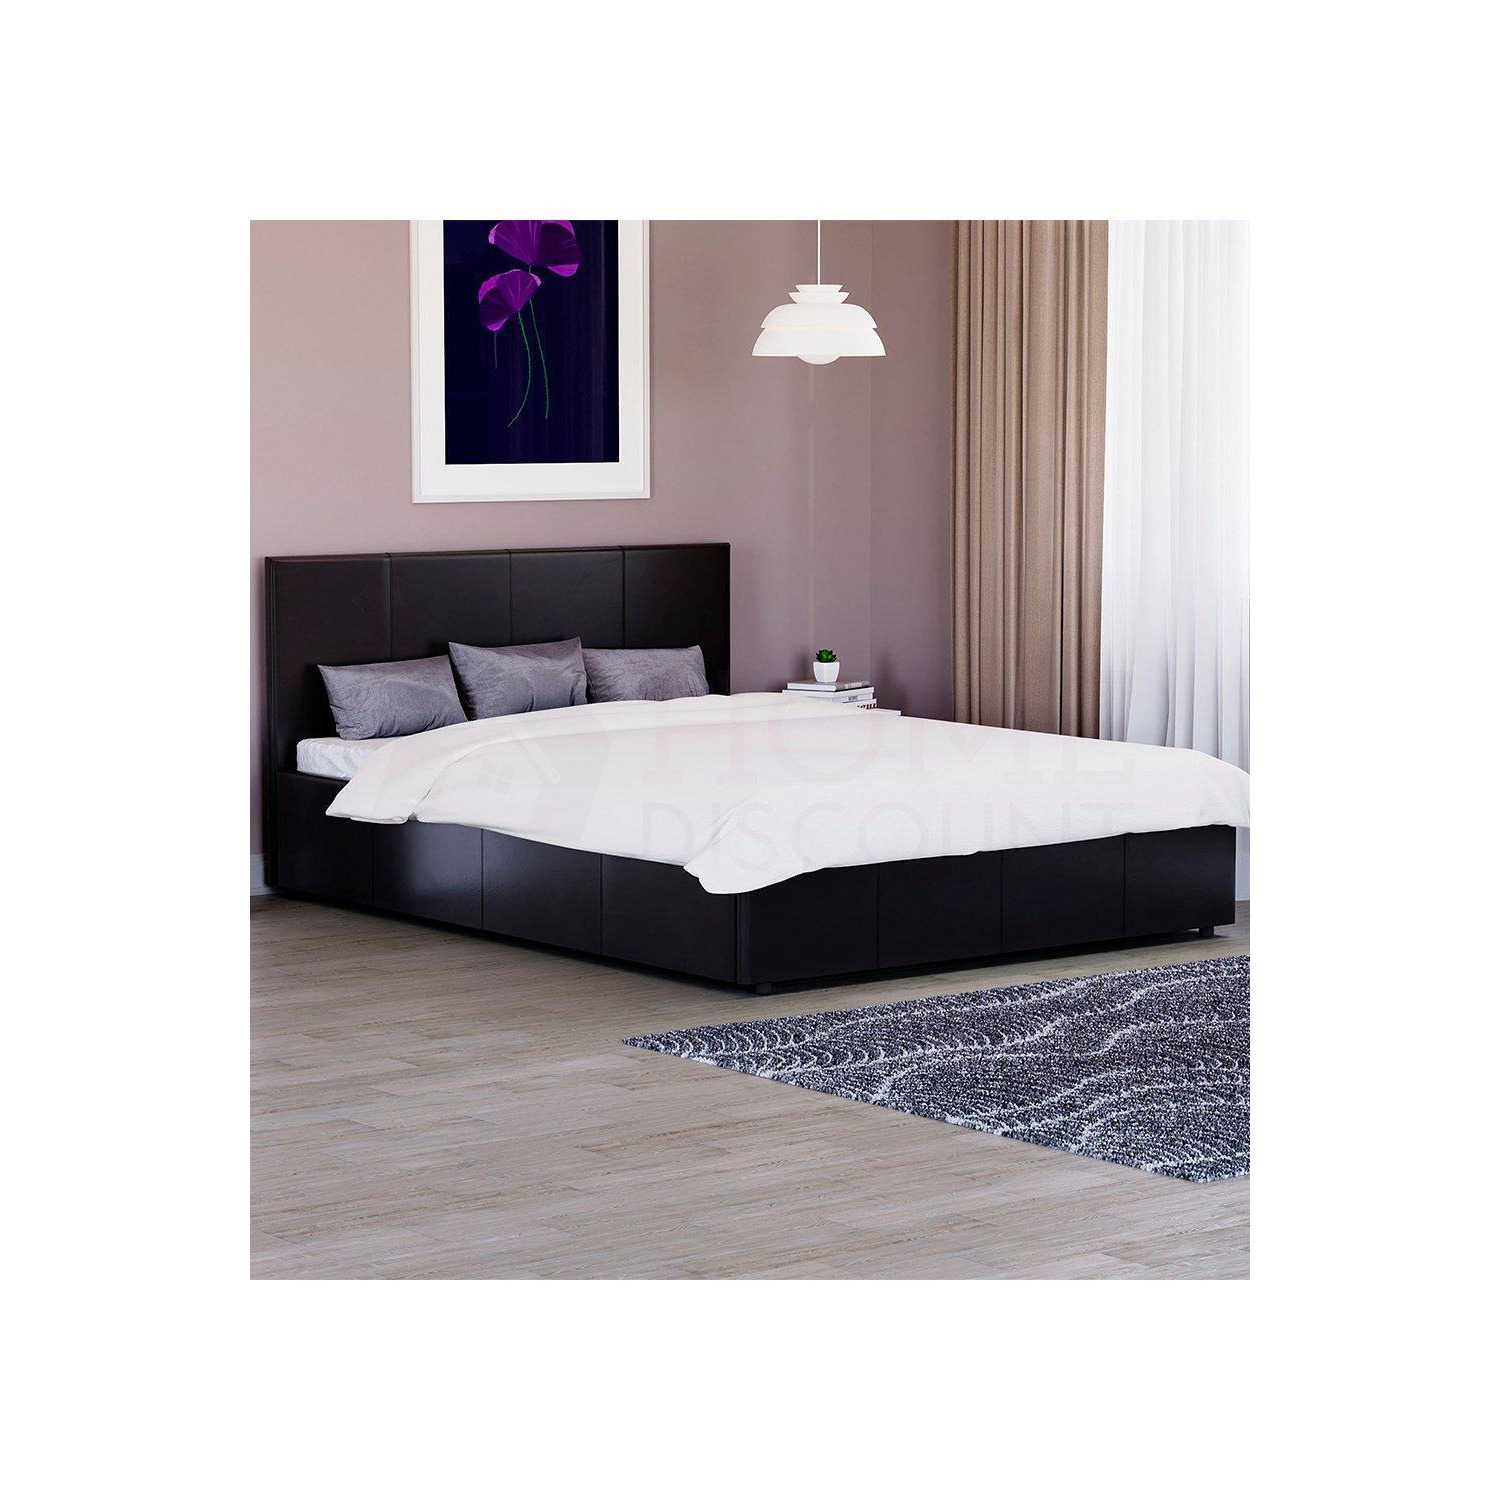 Vida Designs Lisbon Double Ottoman Faux Leather Bed Frame 870 x 1440 x 2000 mm - image 1